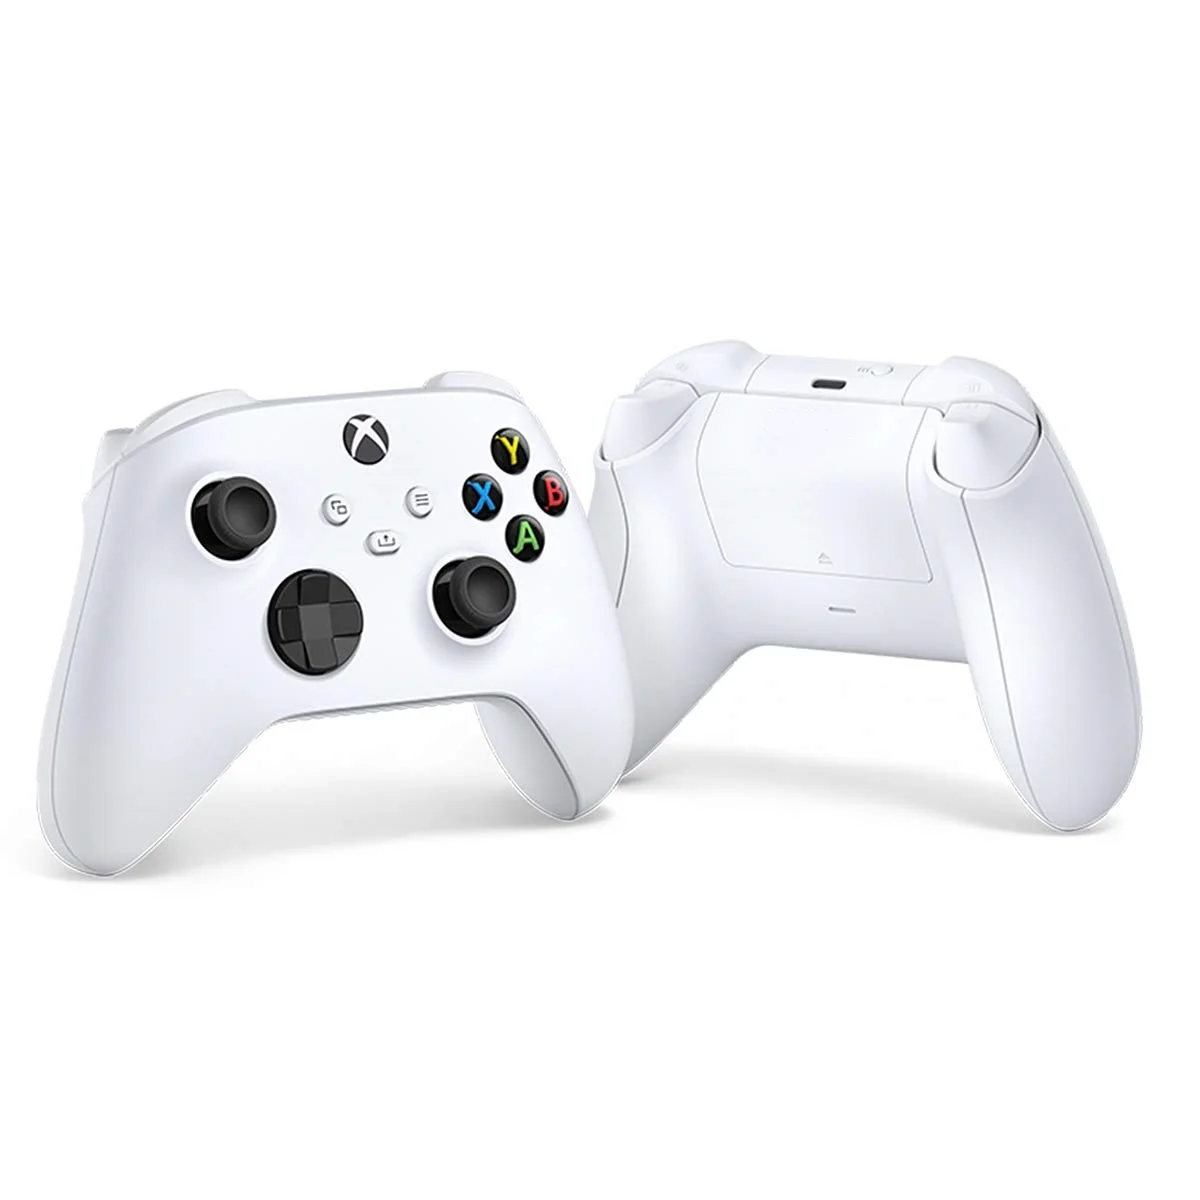 NEW NEW New Original Gamepad For Xbox One S Gaming Wireless Joystick Remote Controller Jogos Mando C